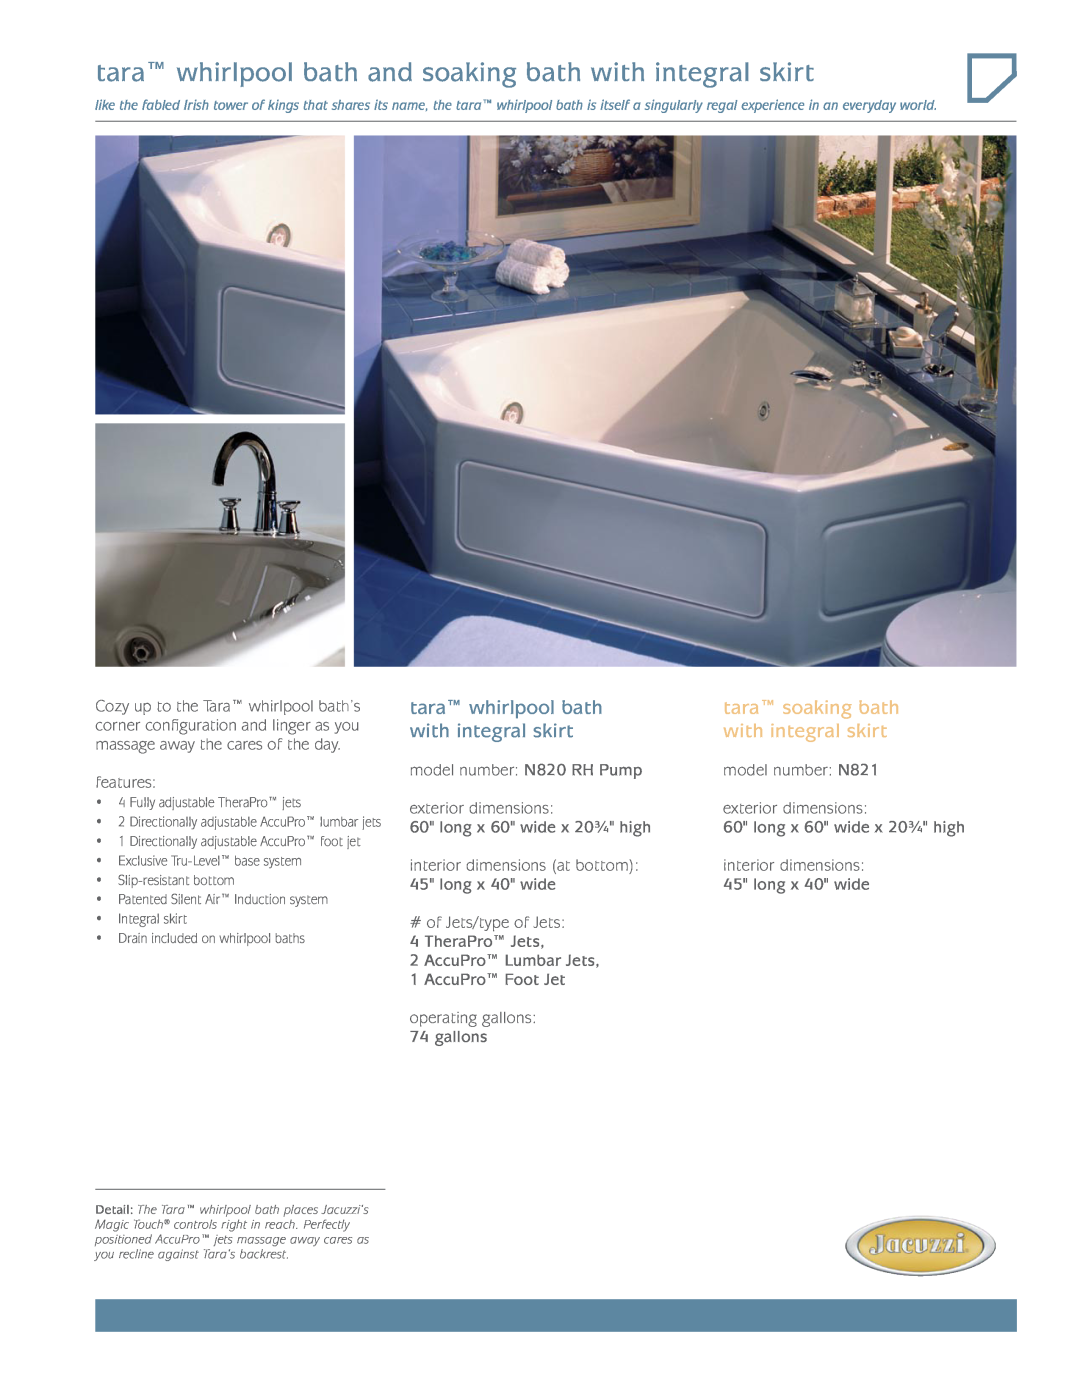 Jacuzzi N820 dimensions tara whirlpool bath, tara soaking bath, with integral skirt 